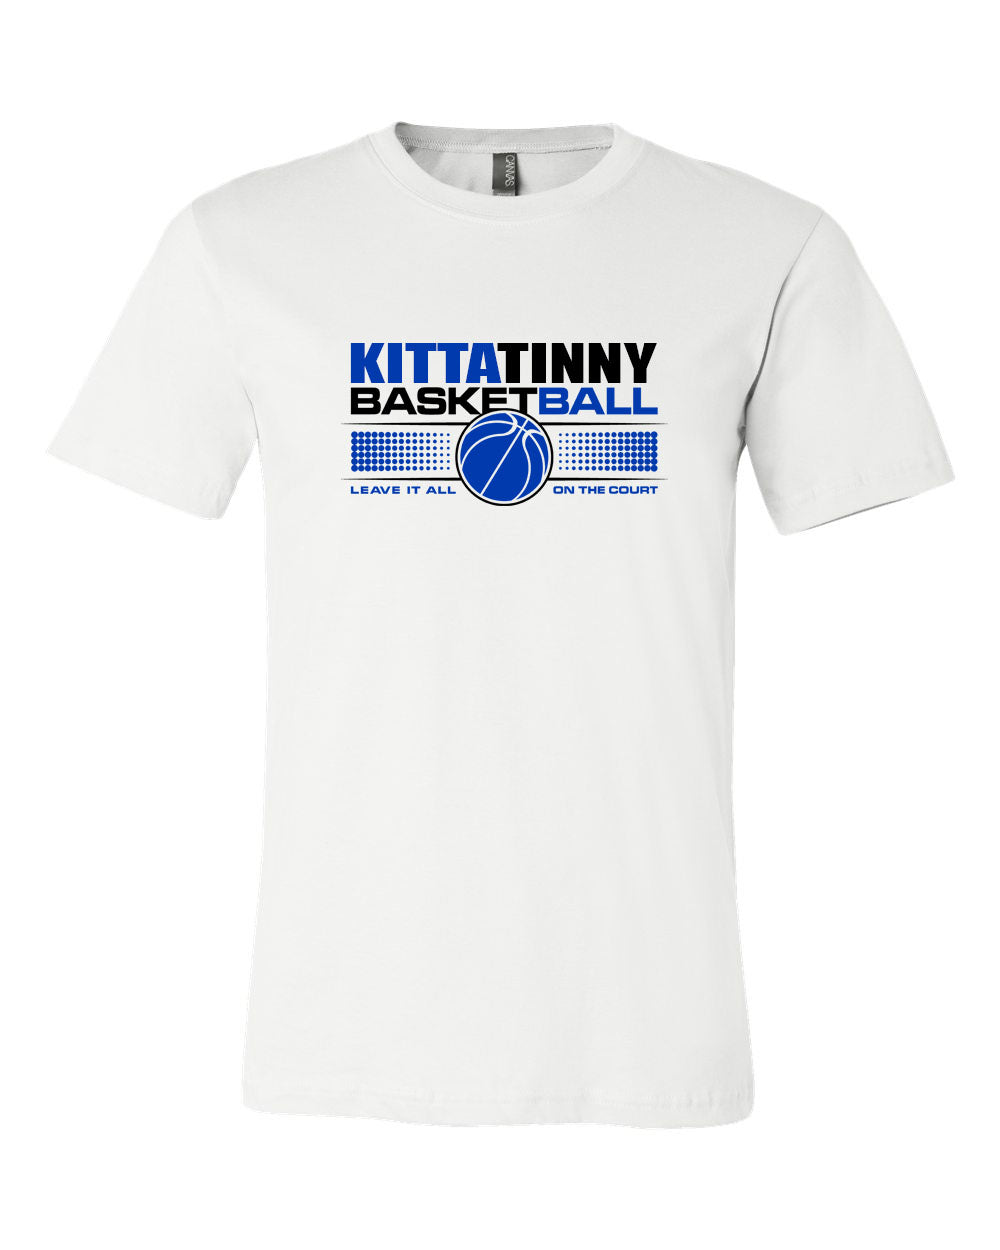 Kittatinny Basketball Design 1 T-Shirt